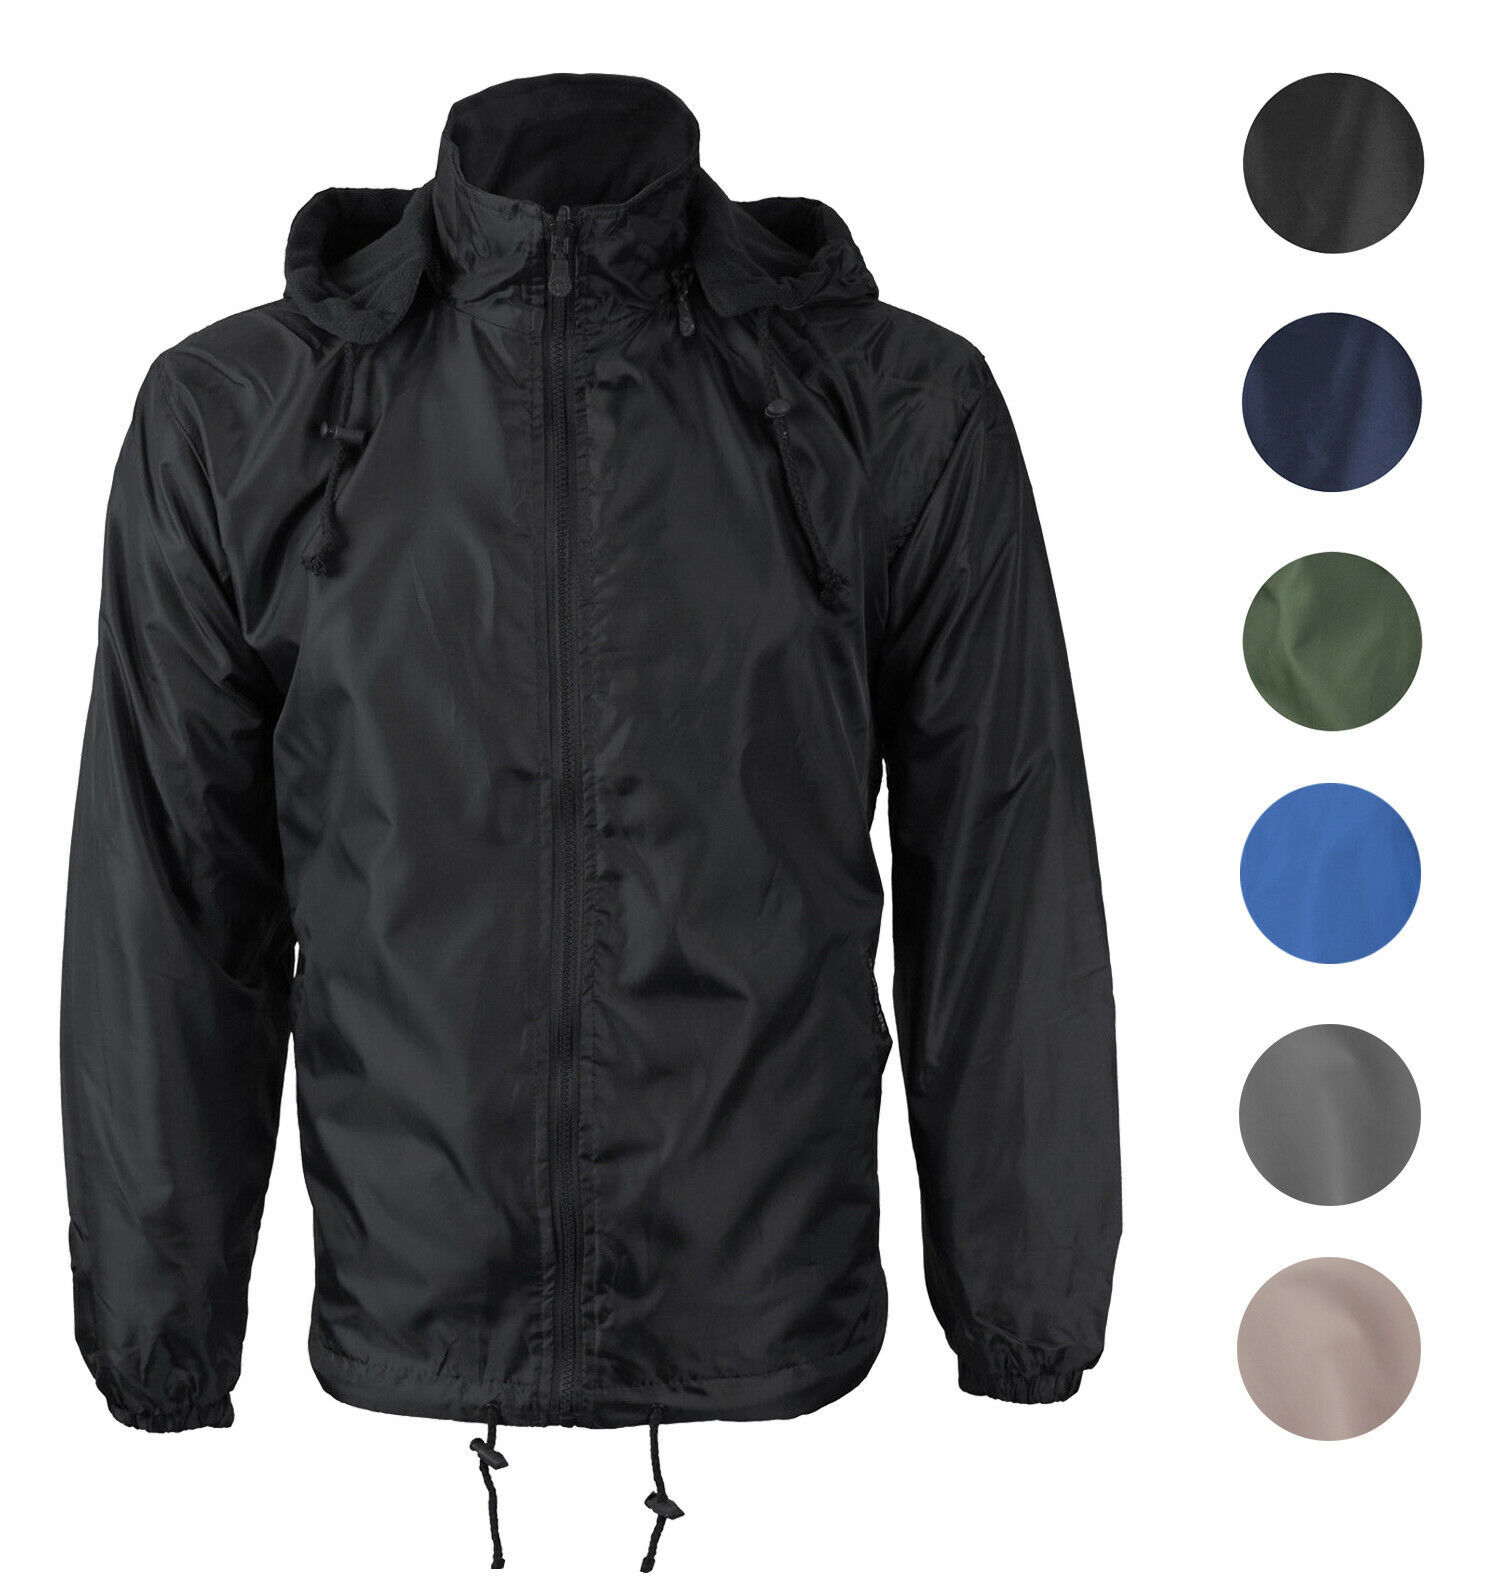 Primary image for Men's Water Resistant Polar Fleece Lined Hooded Windbreaker Rain Jacket